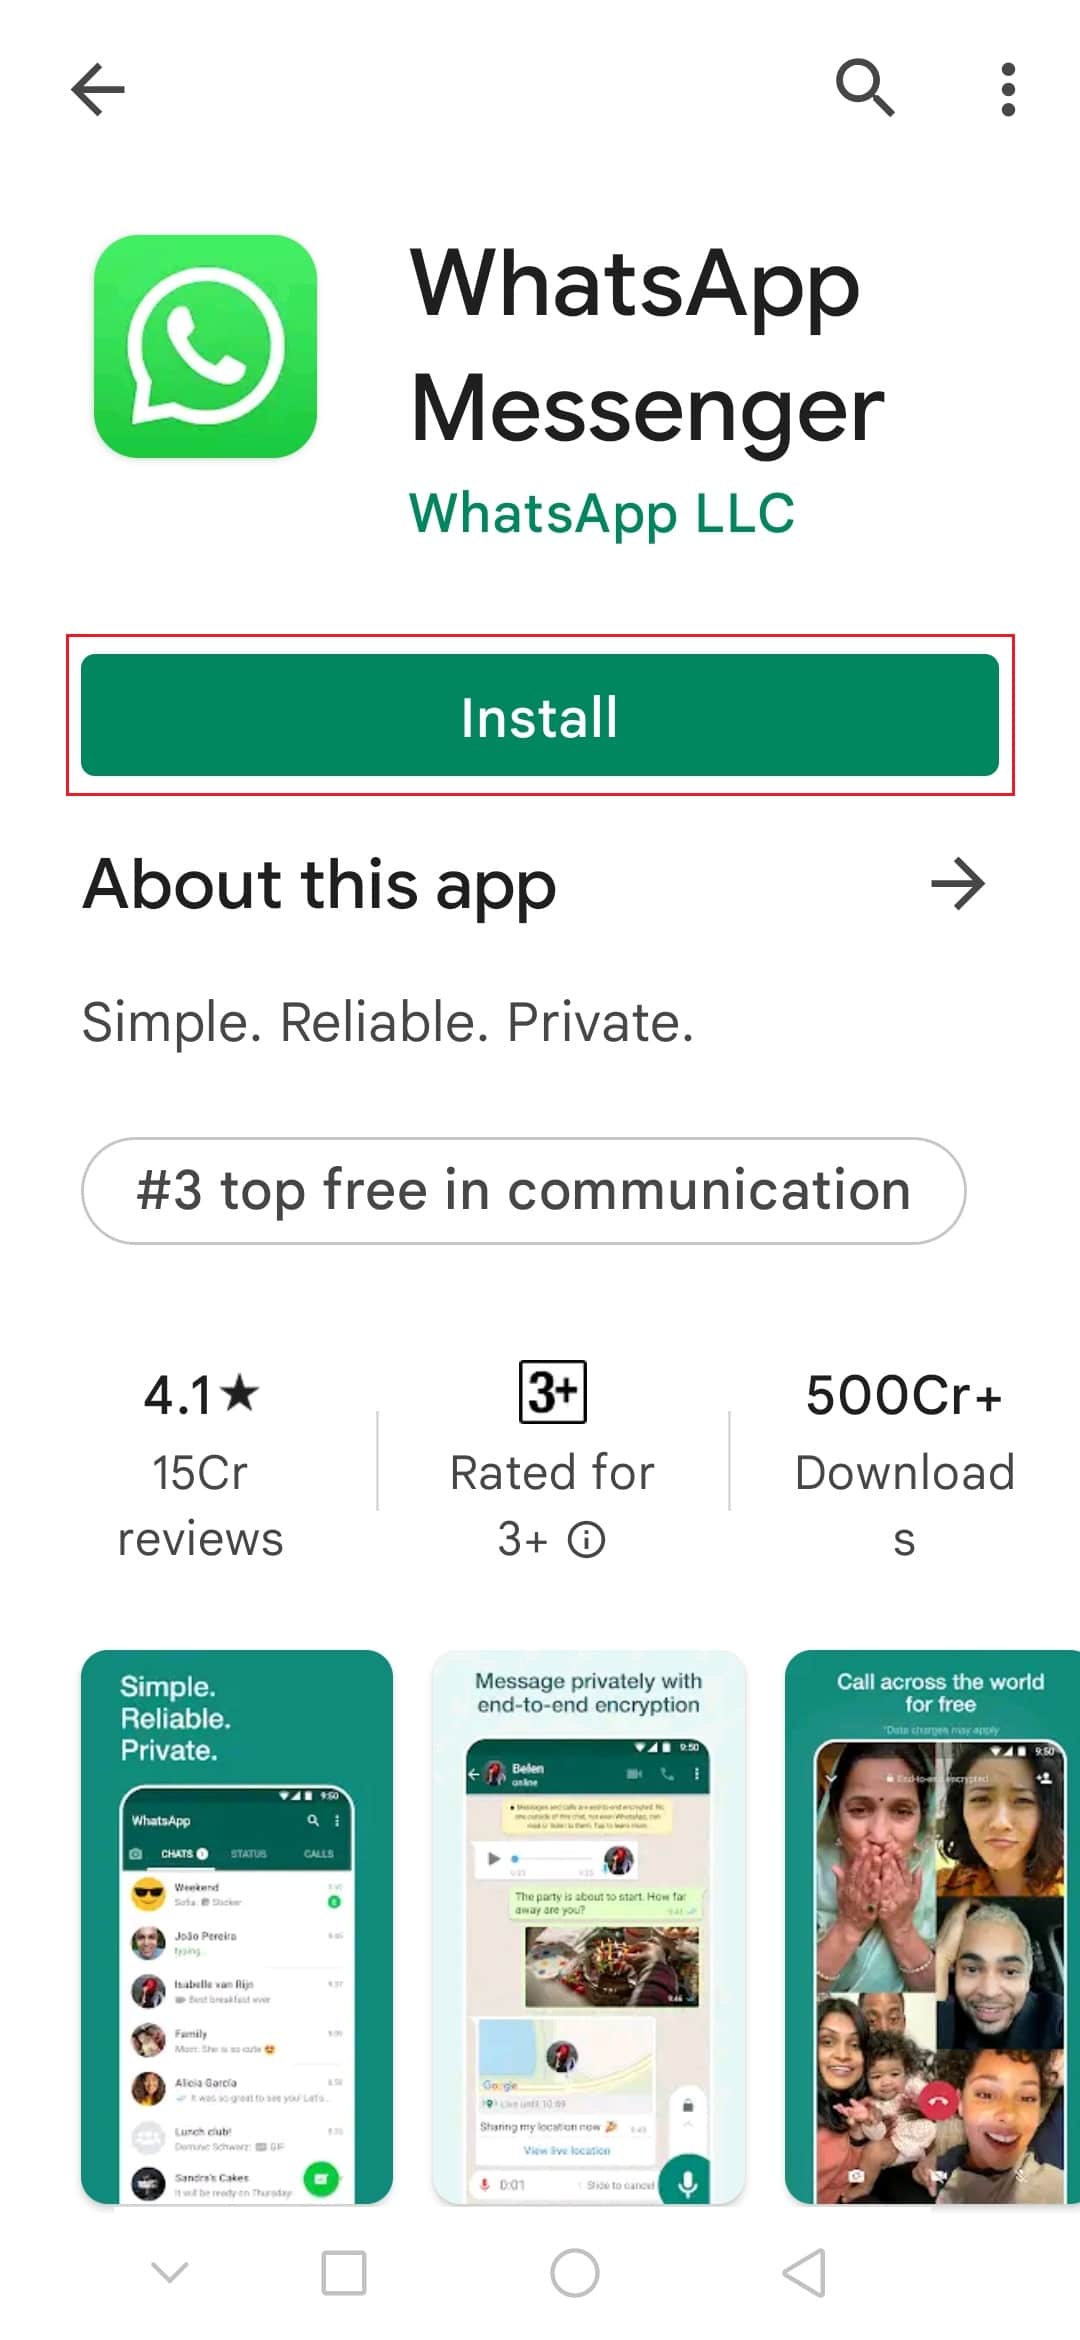 установить WhatsApp в Google Play Store для Android-приложения